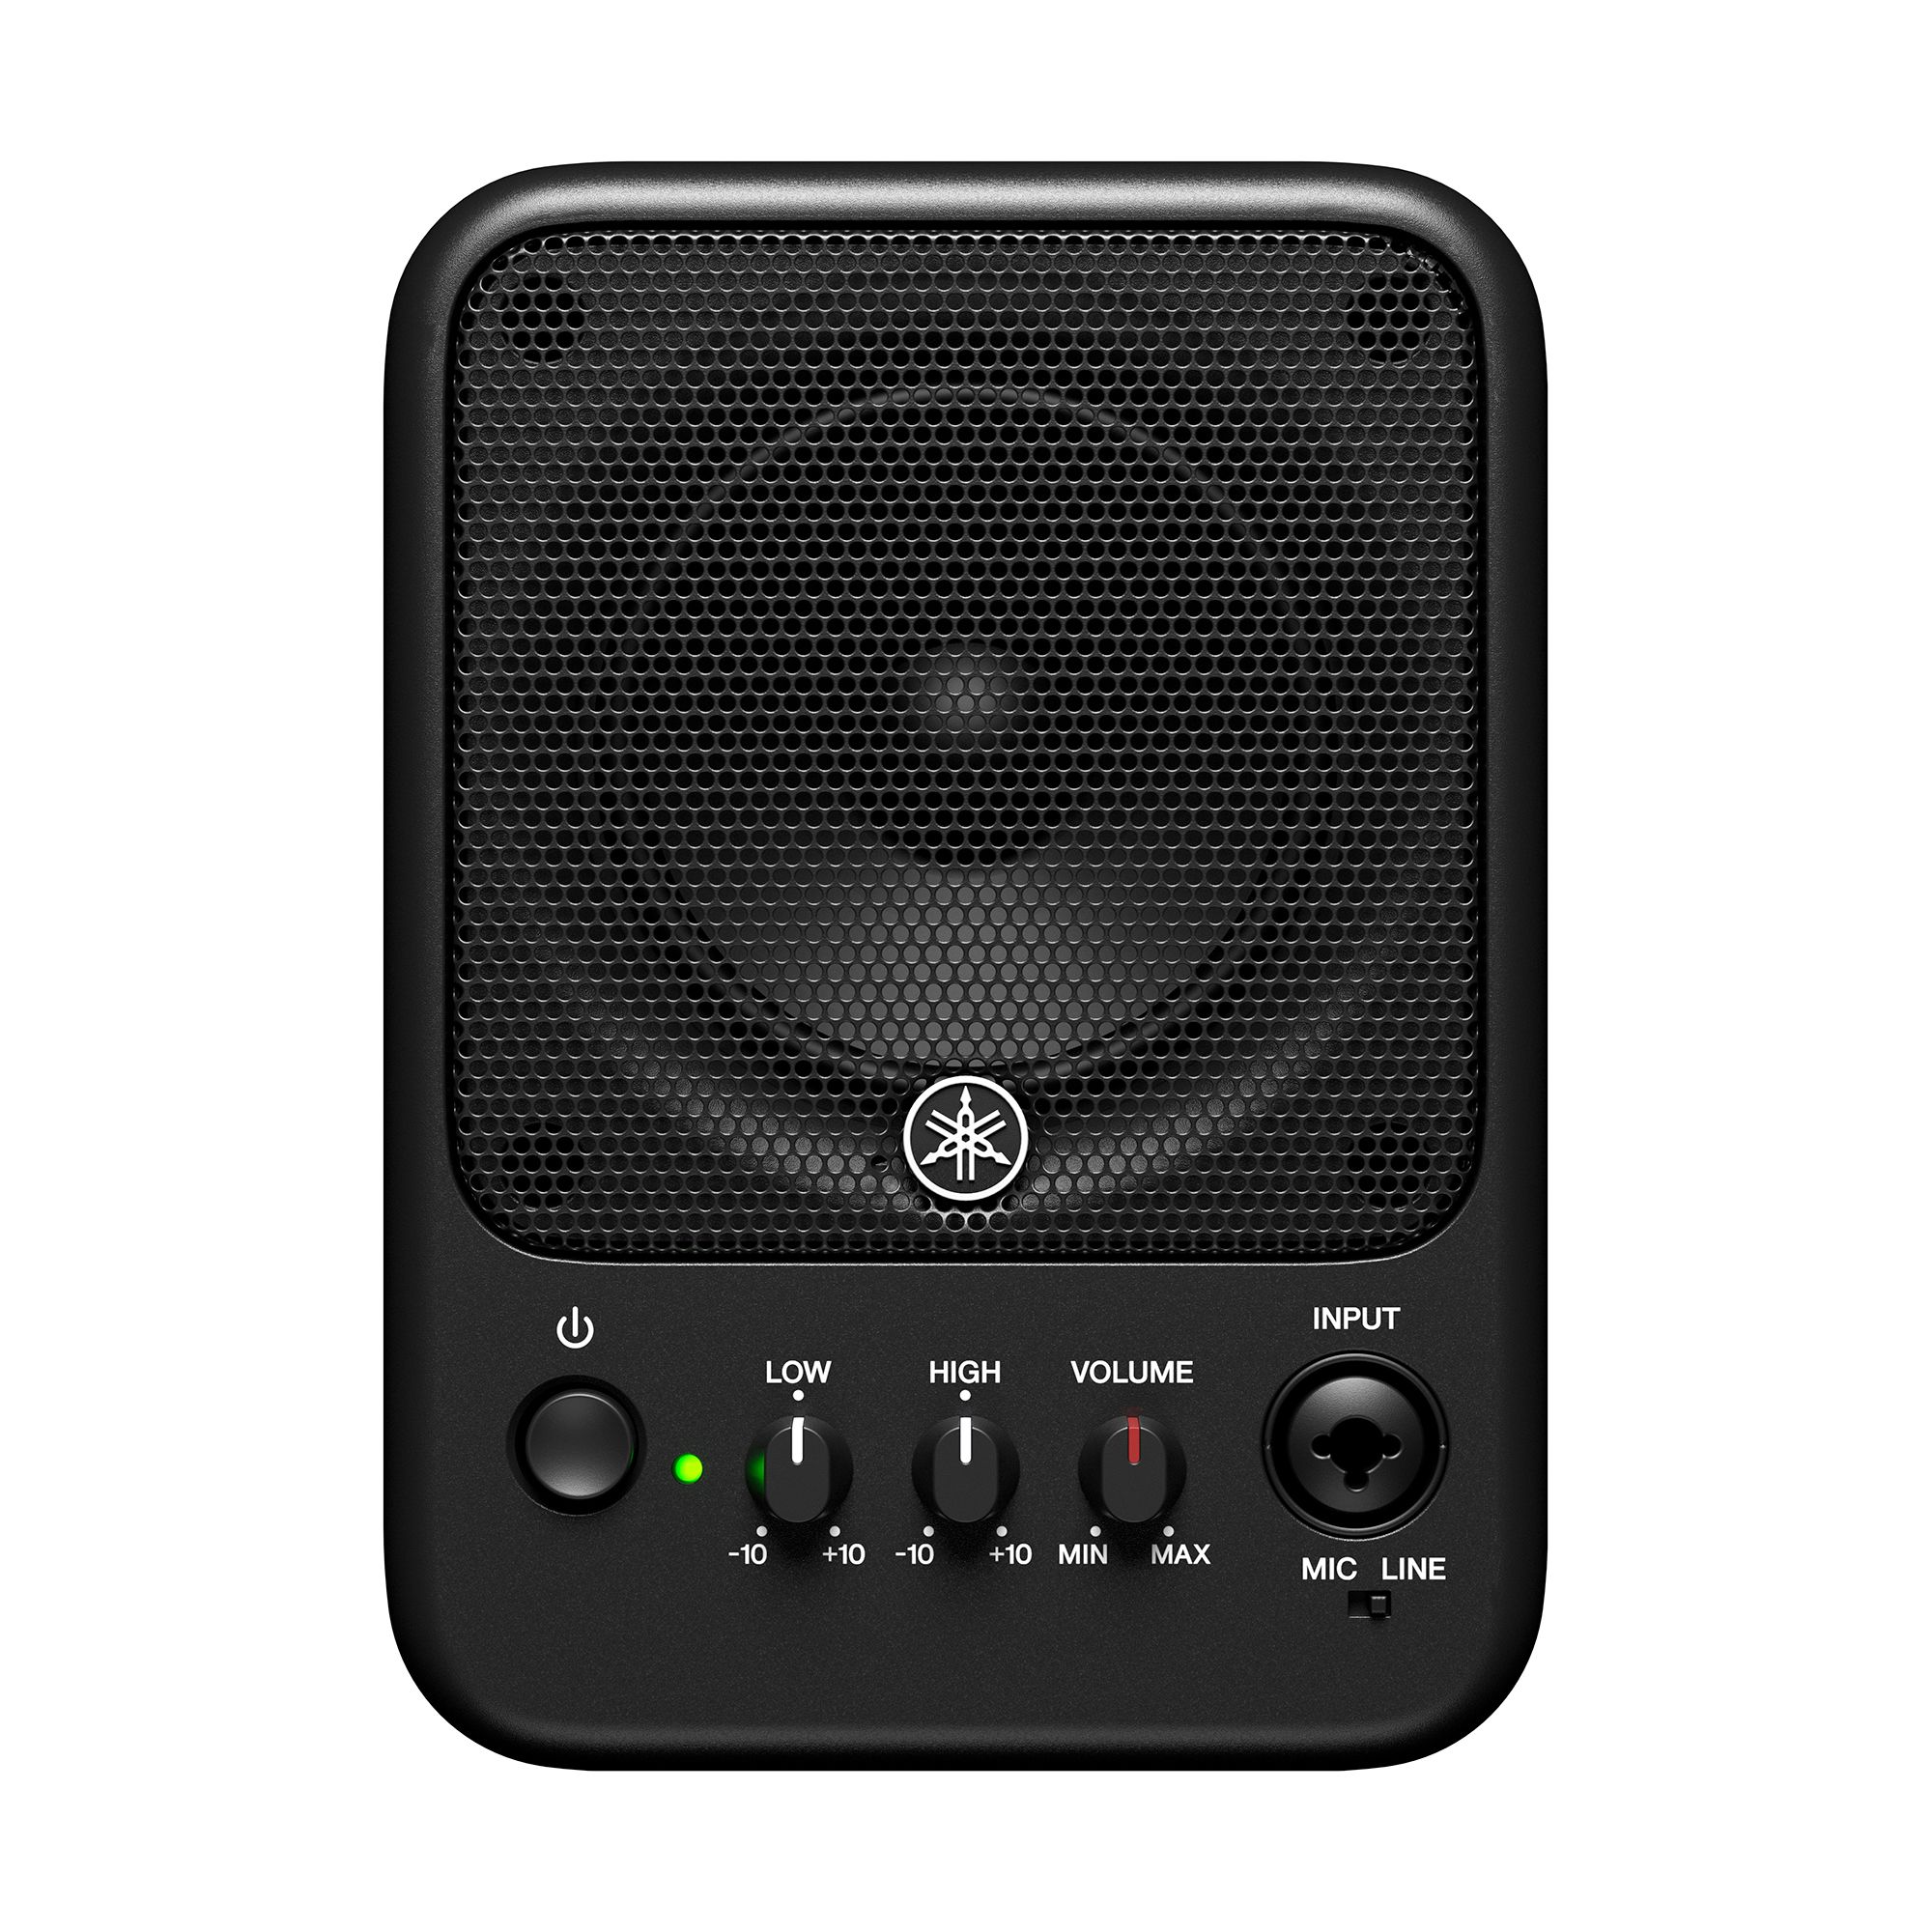 MS101-4 Powered Monitor Speaker - Yamaha USA